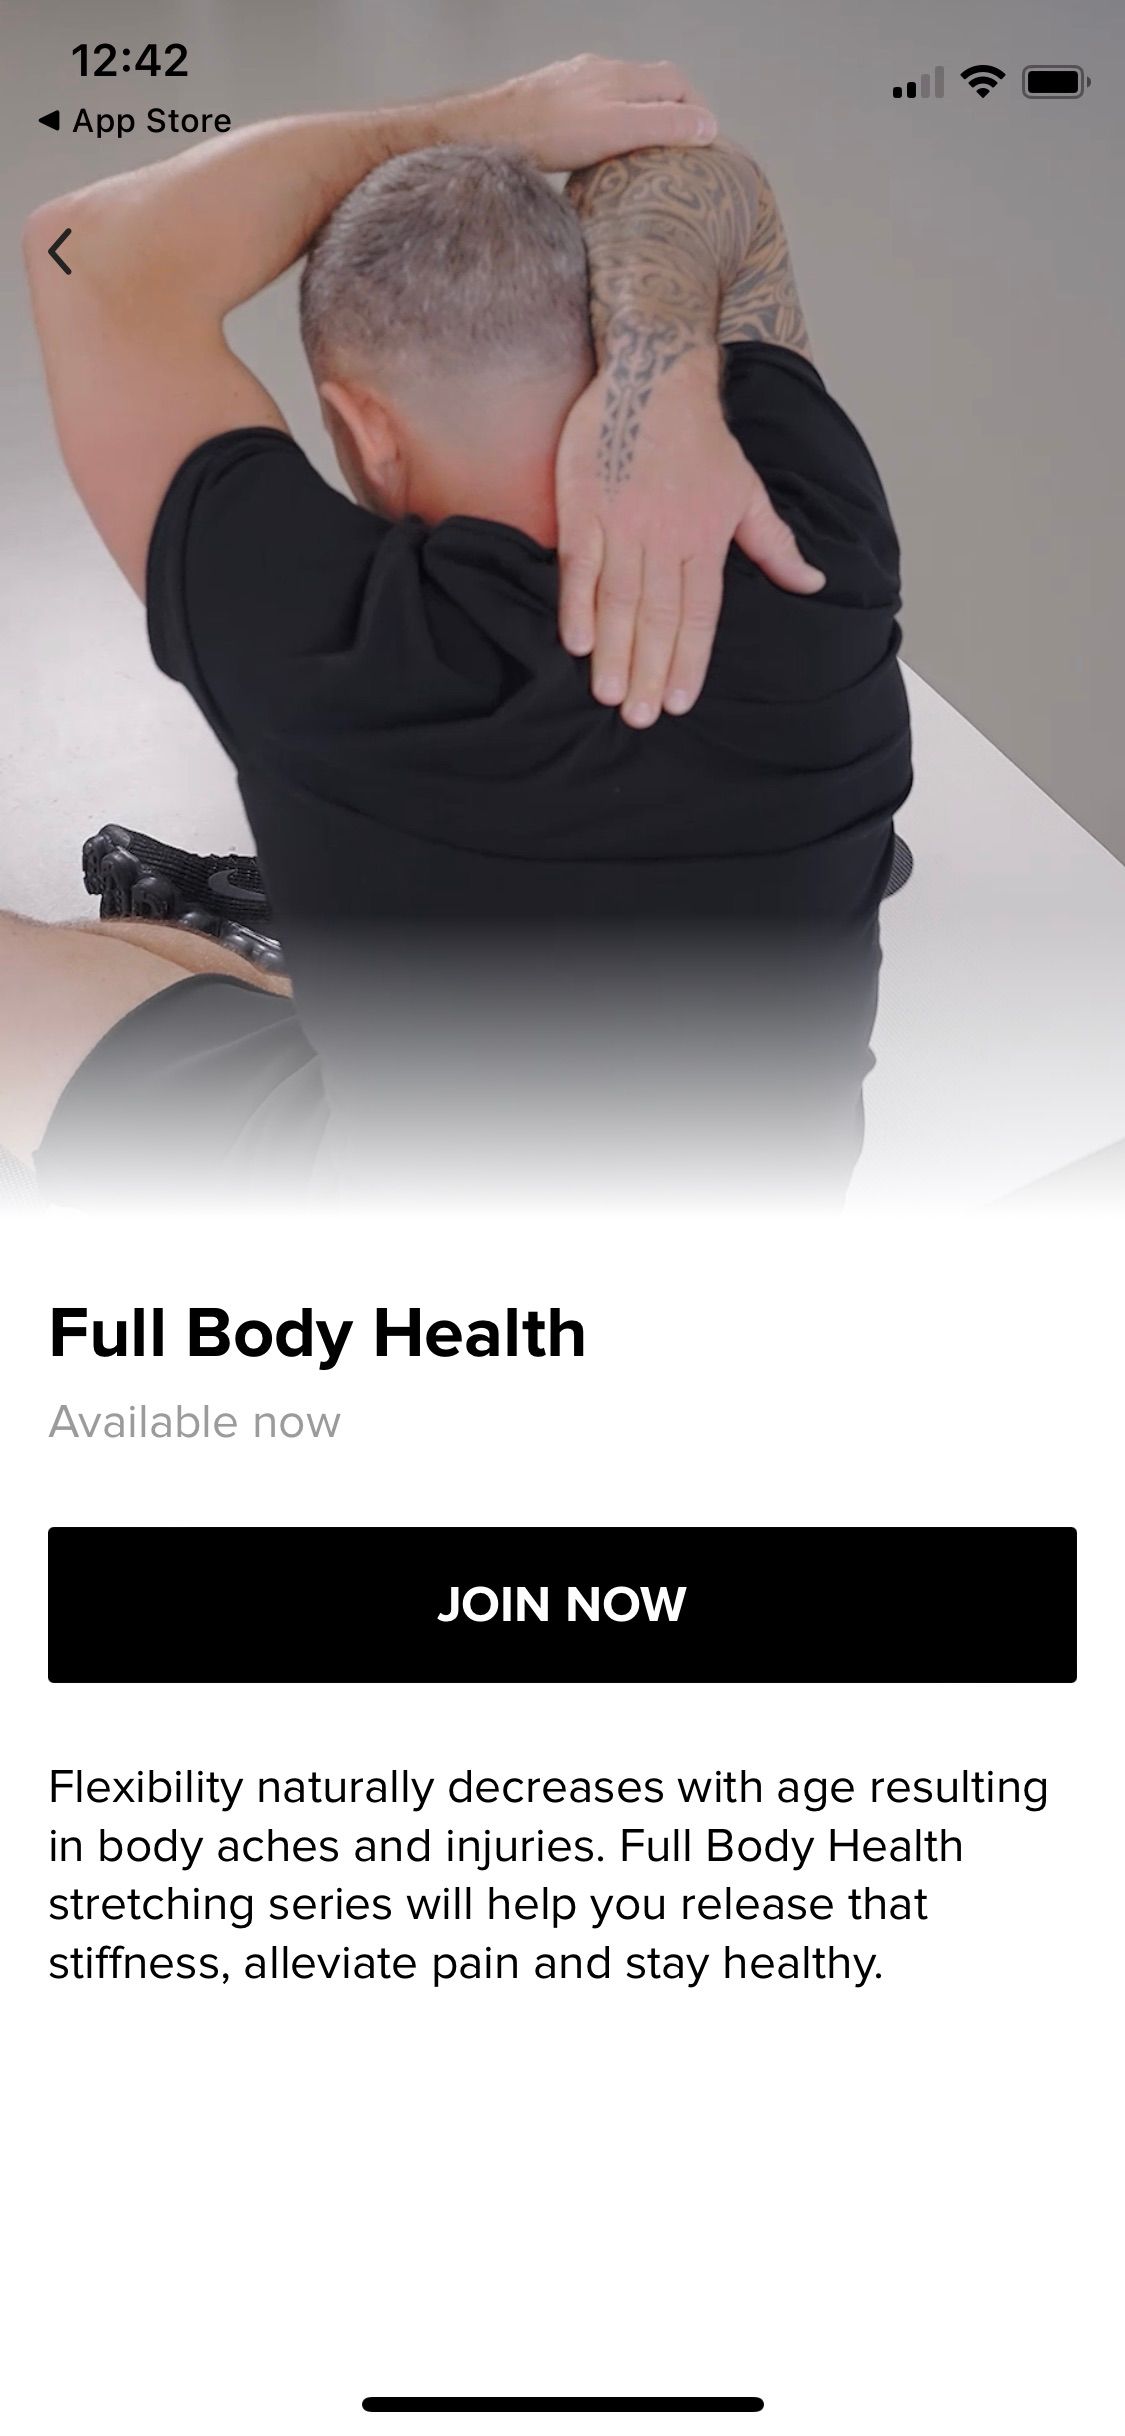 Screenshot of Stretchit app showing Full Body Health challenge